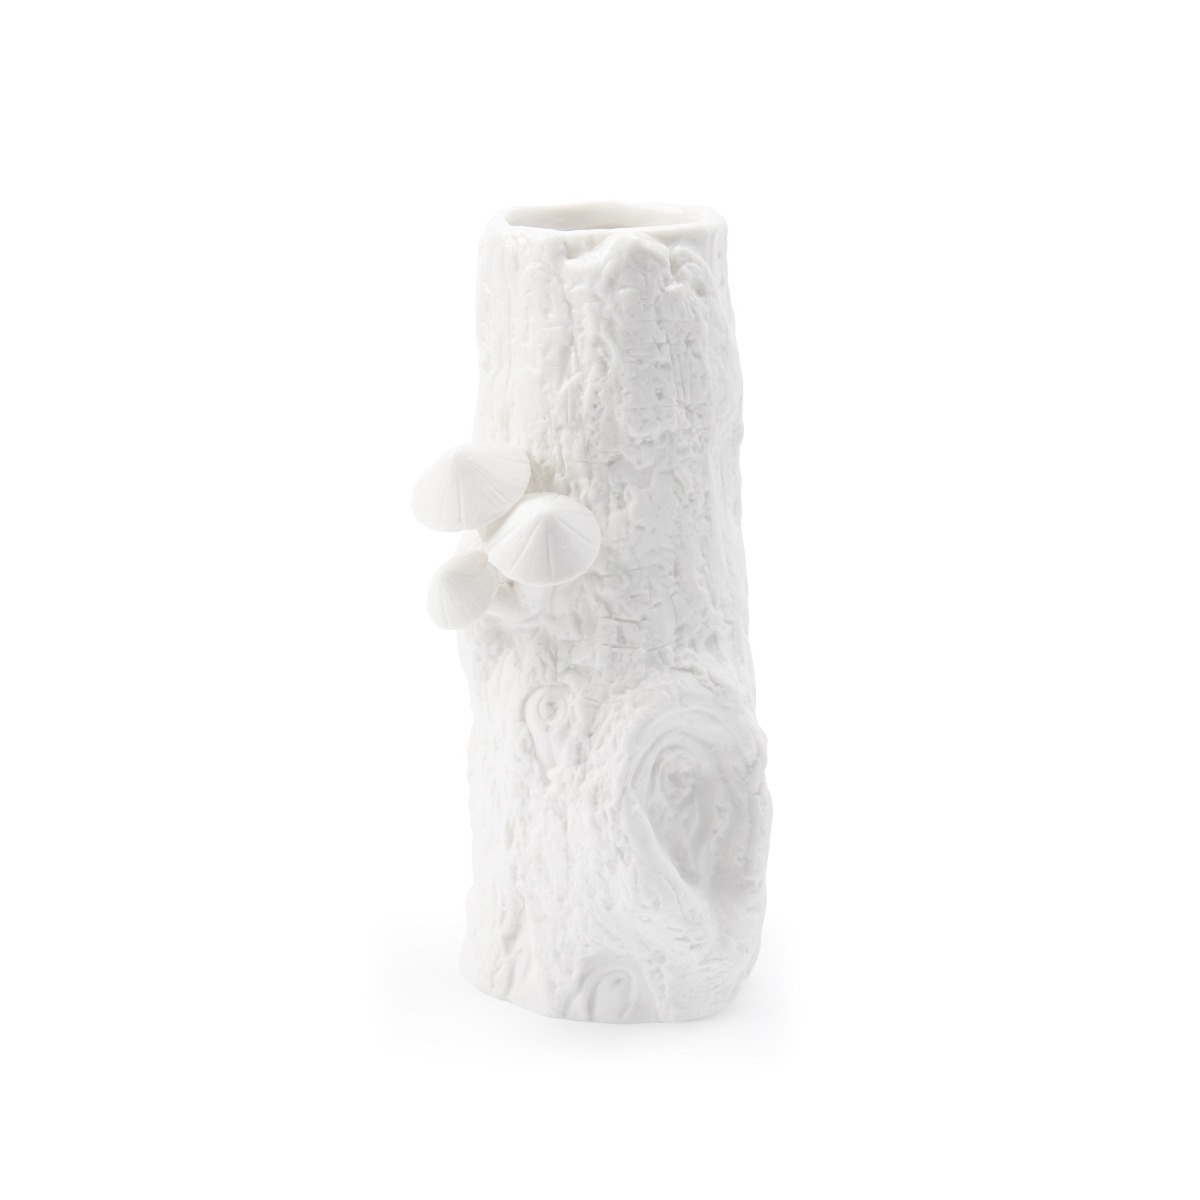 Small Mayfair Blanc Vase, Mayfair Vase Collection